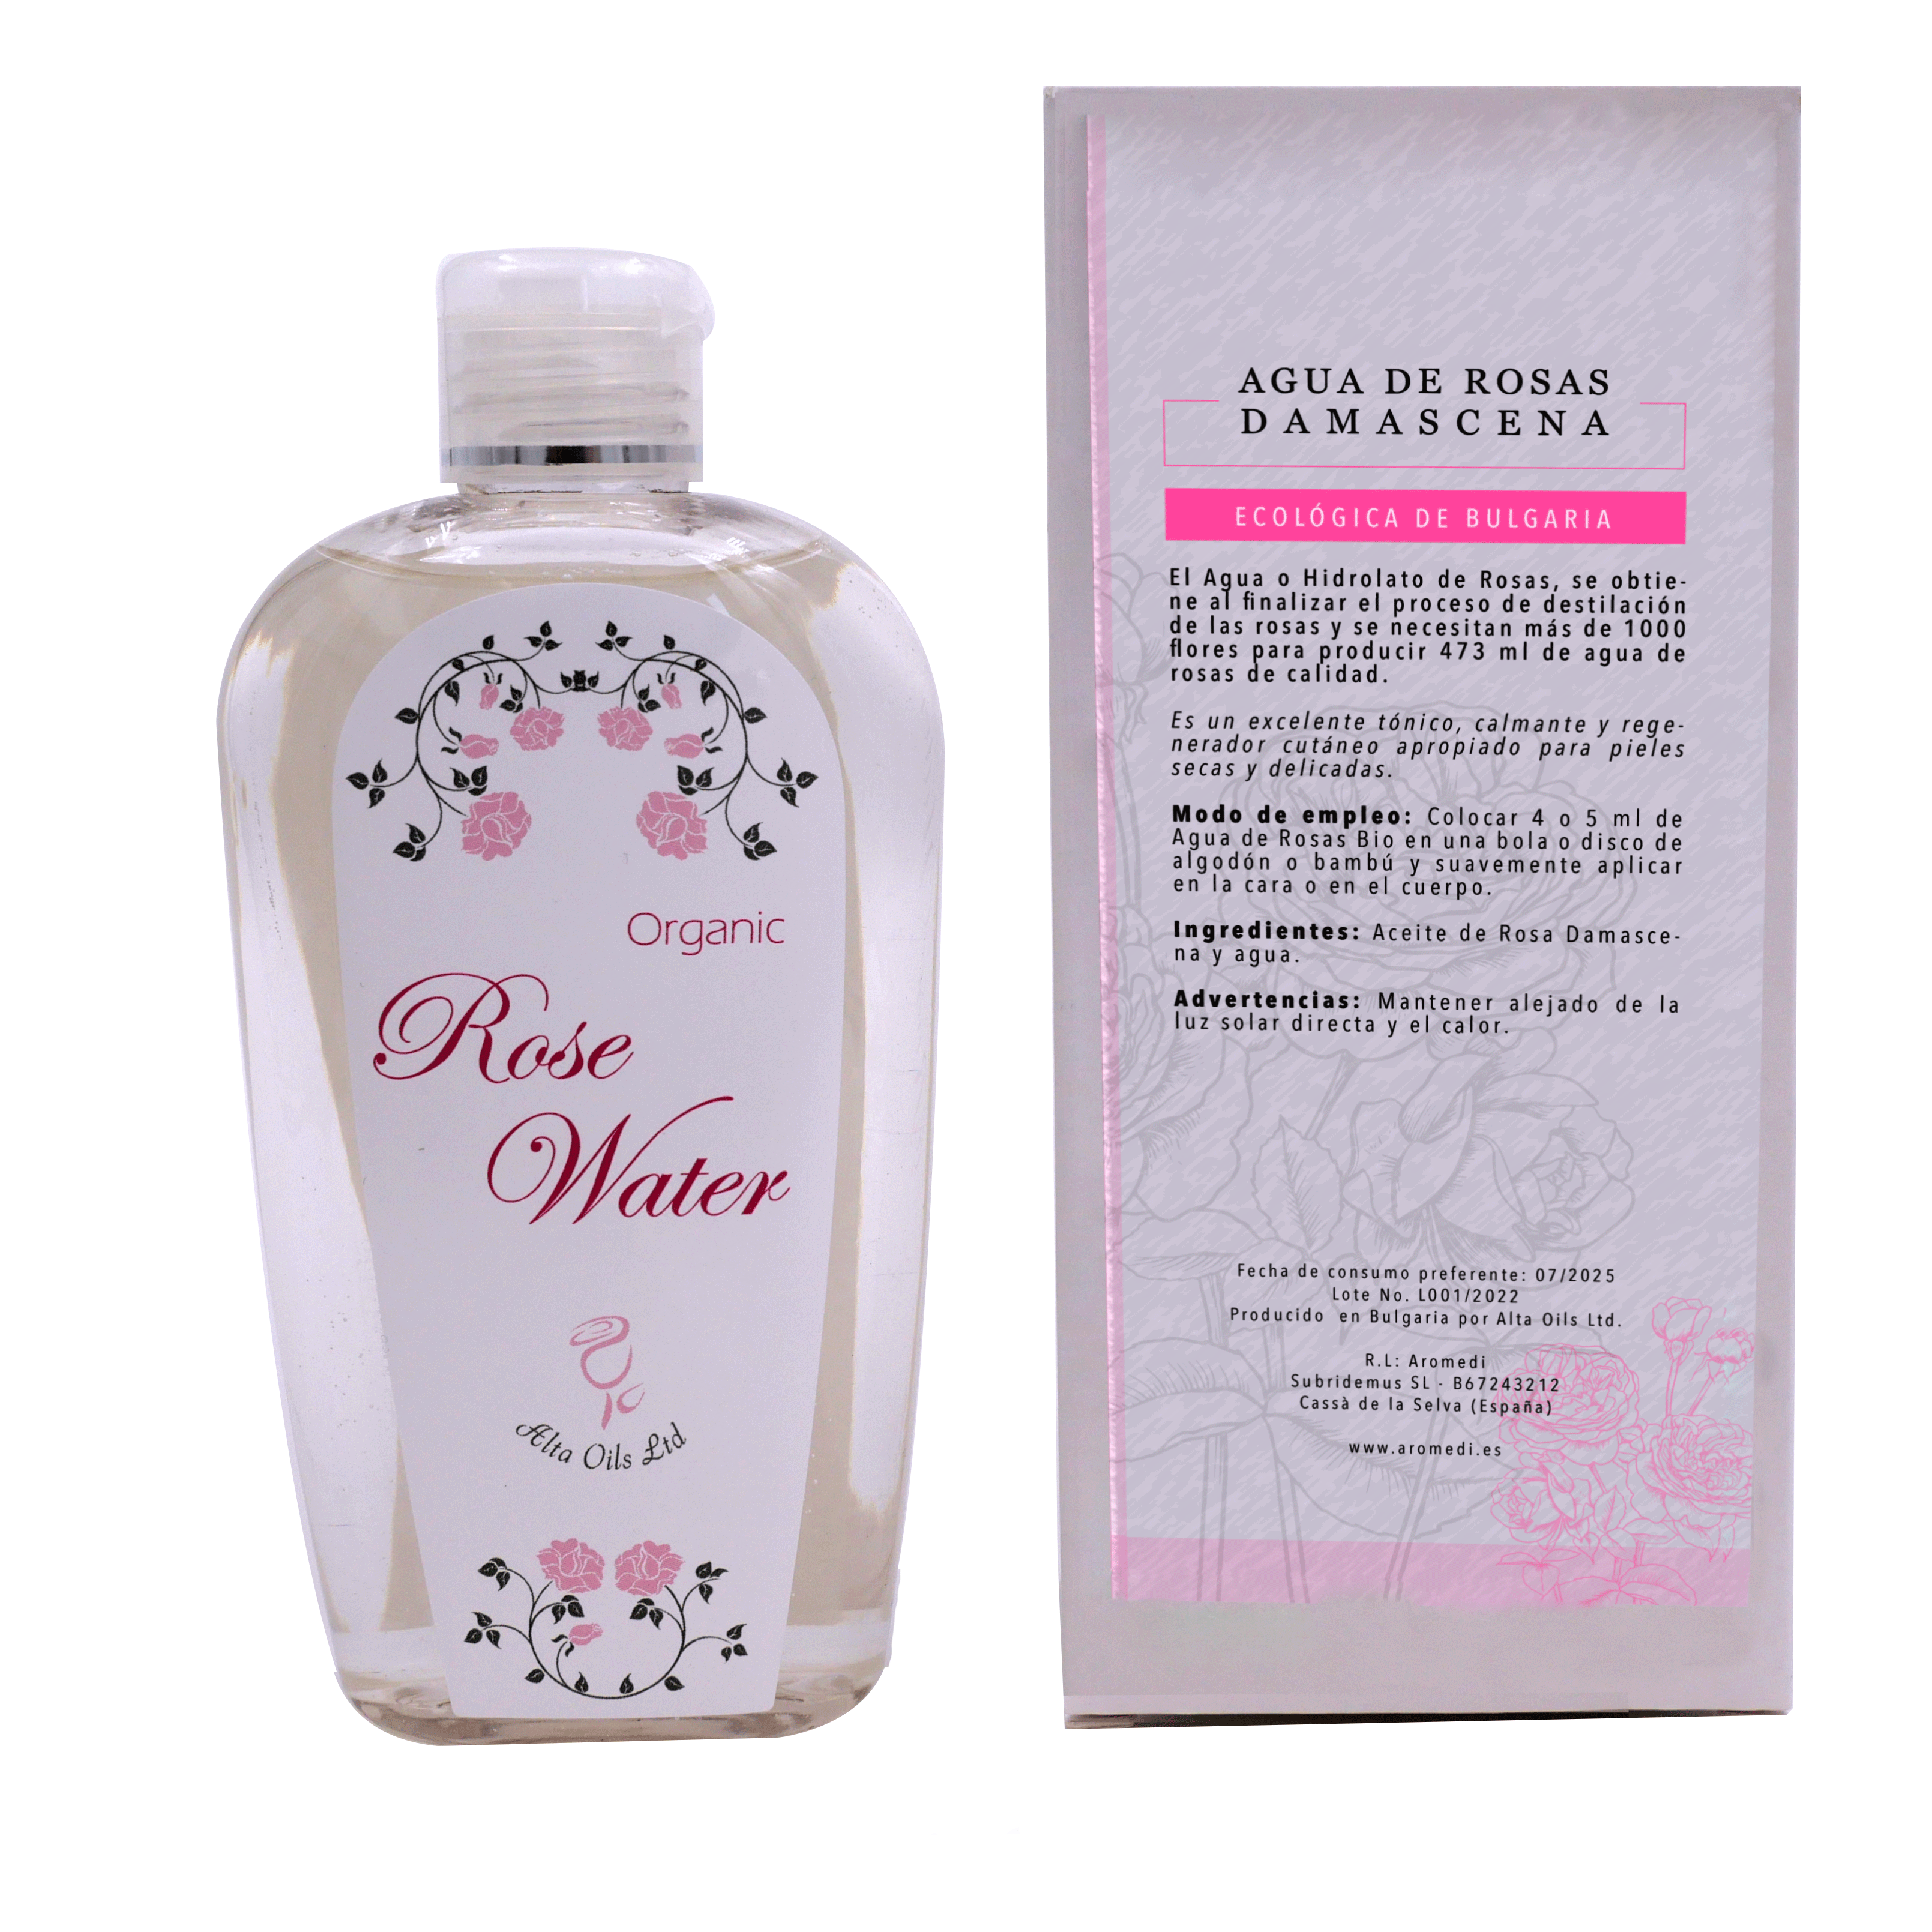 Da Don Algodon perfume - a fragrance for women 2001